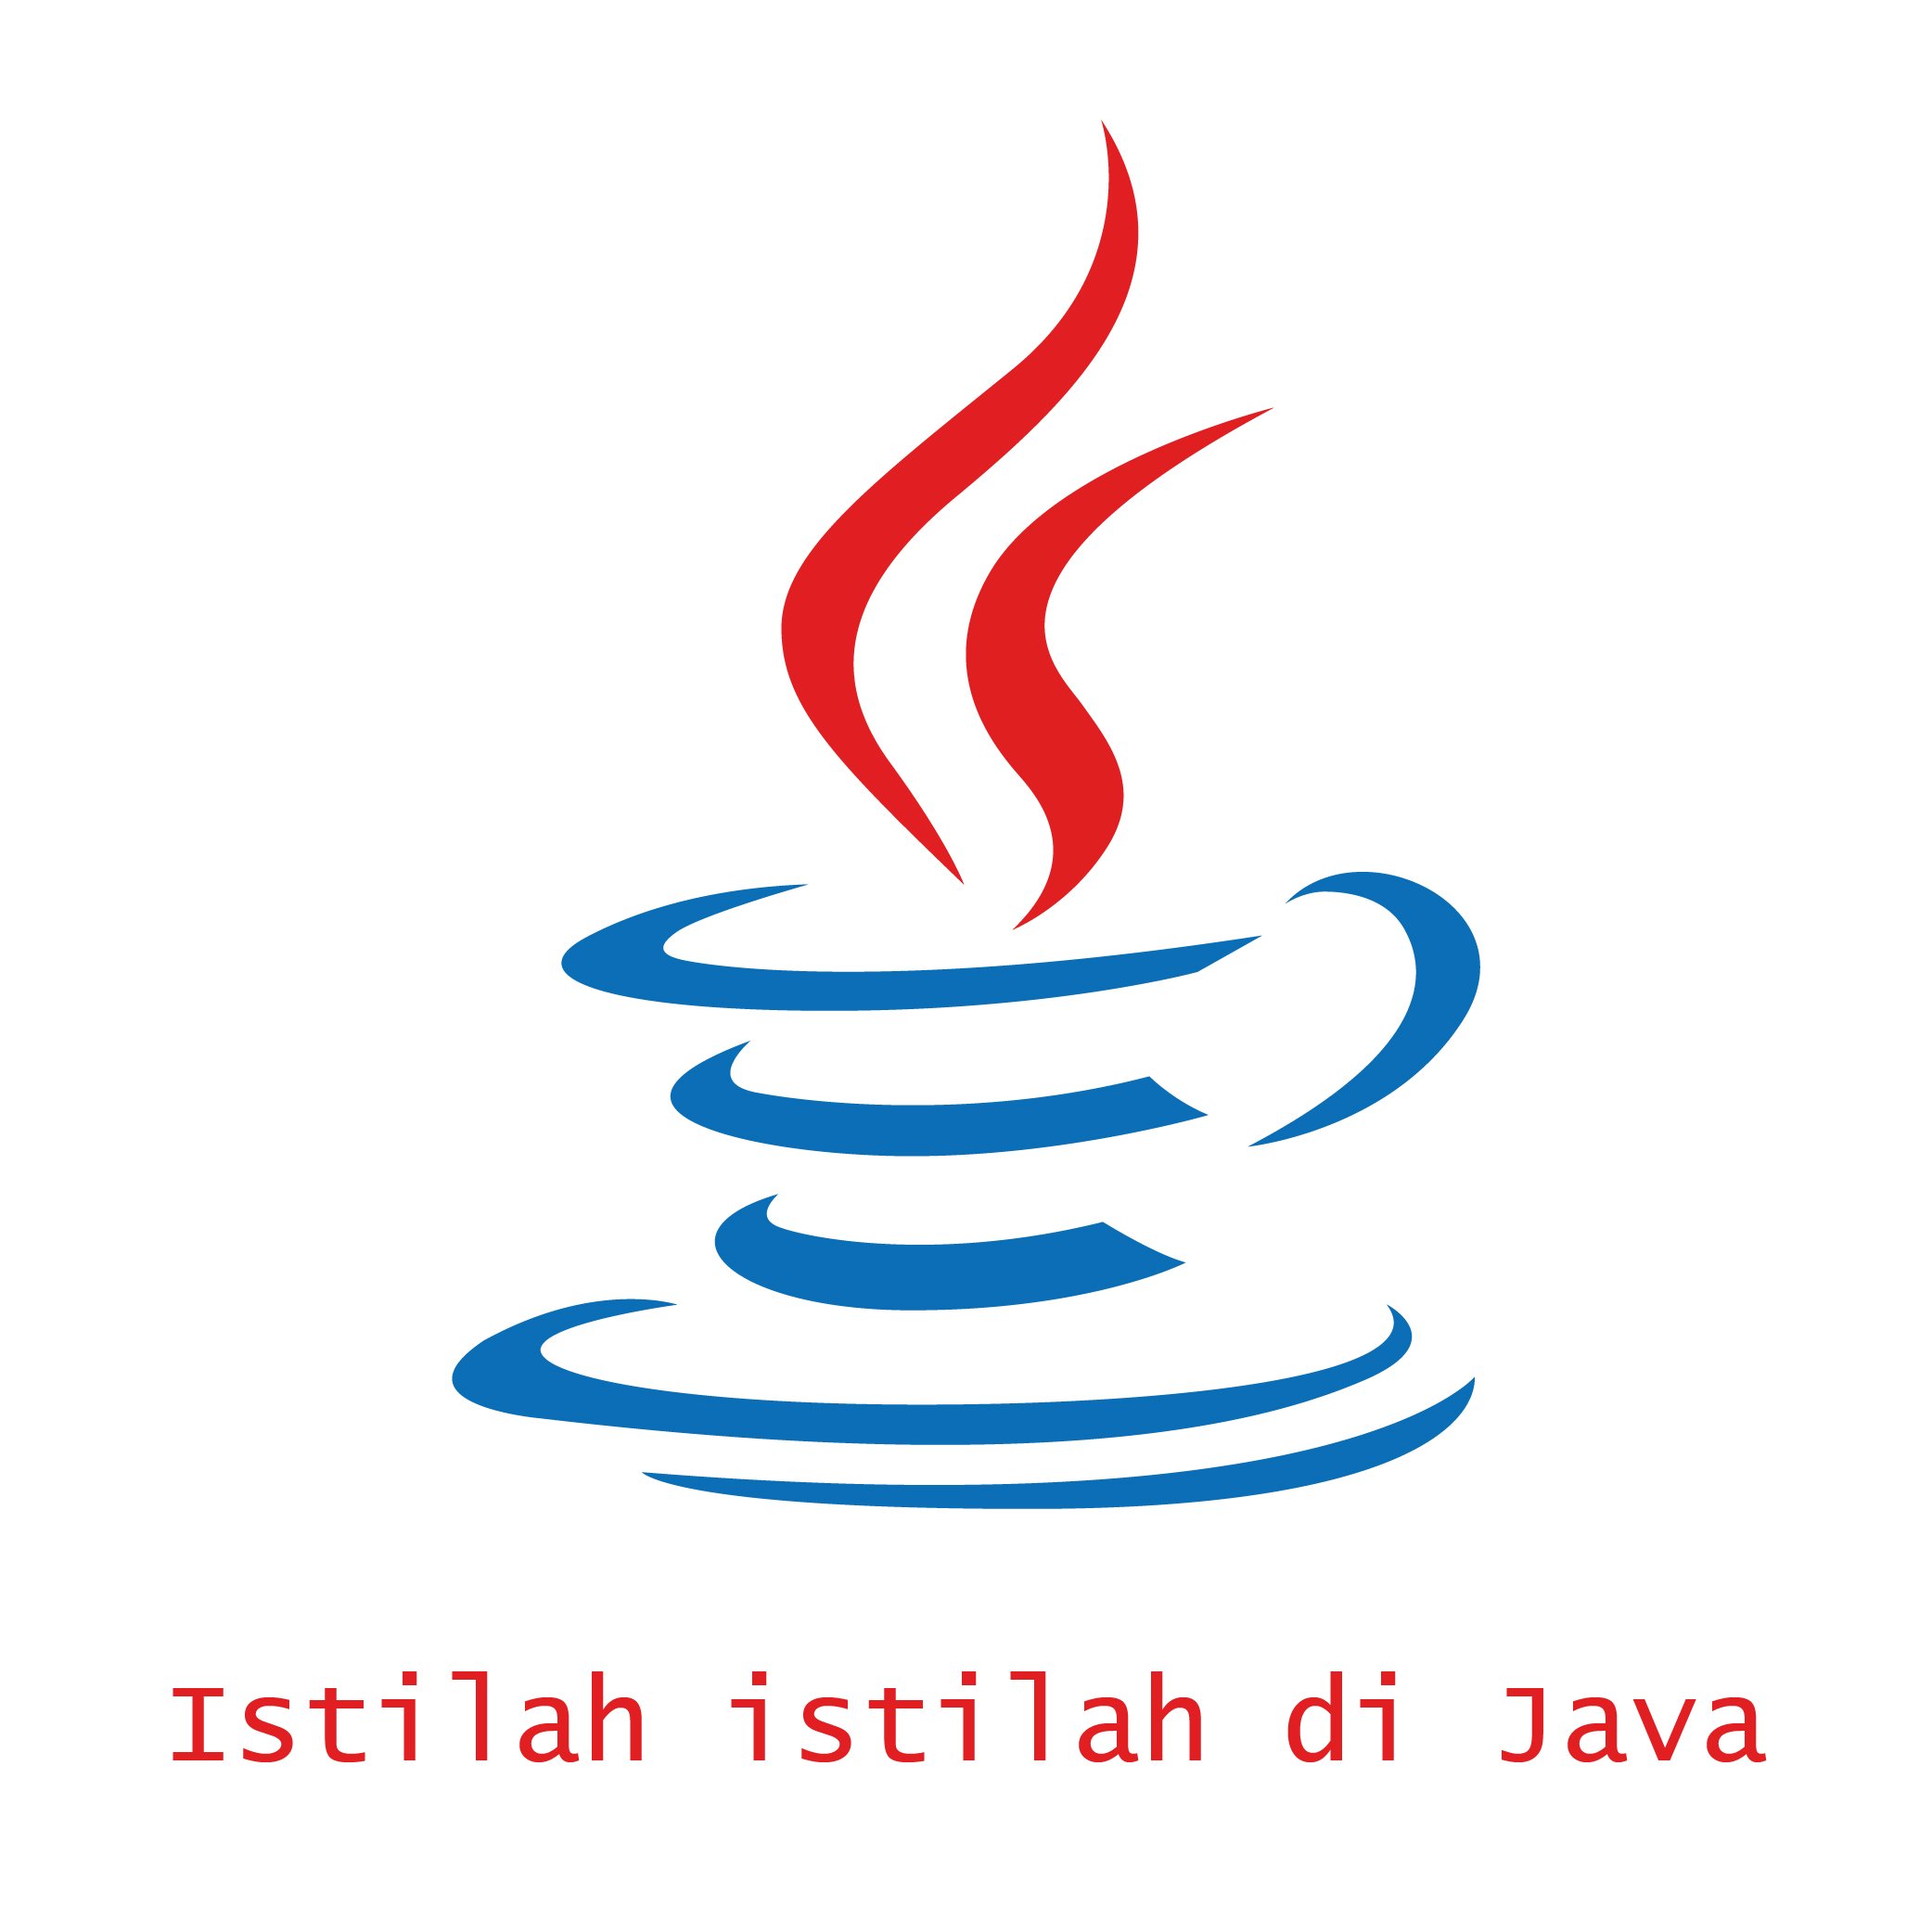 Java без фона